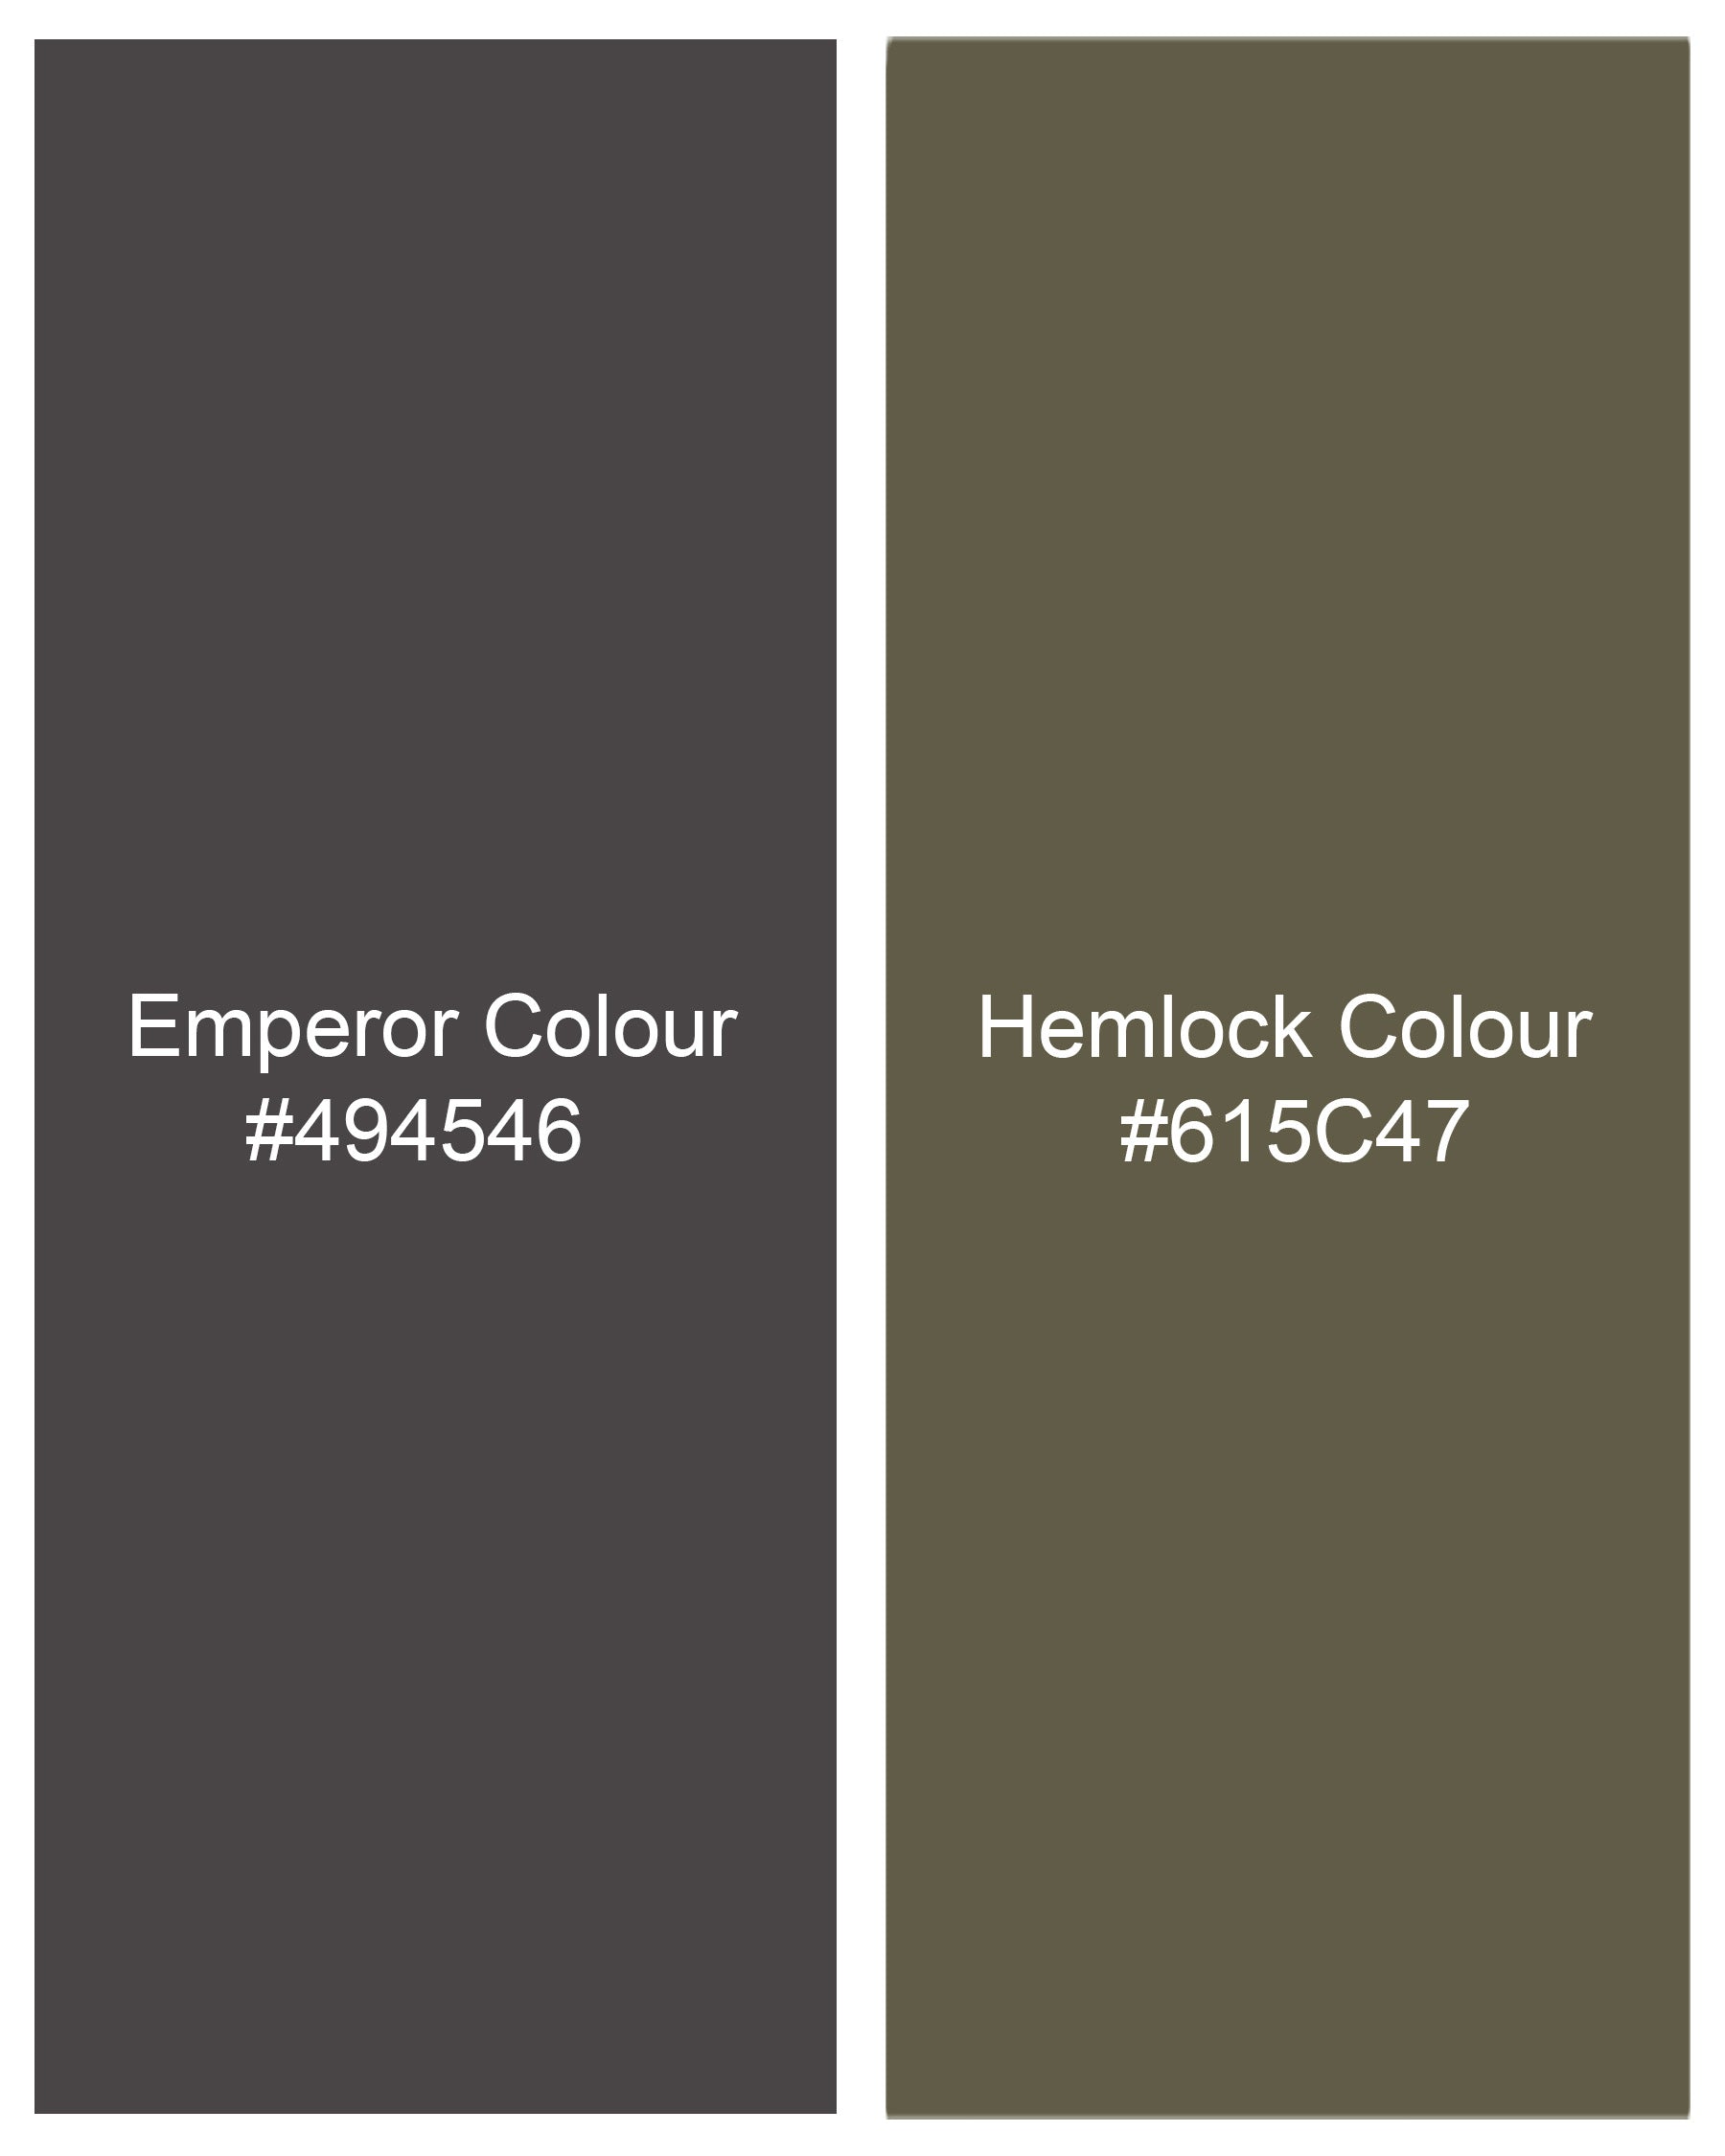 Emperor Gray with Hemlock Dark Brown Checkered Waistcoat V2095-36, V2095-38, V2095-40, V2095-42, V2095-44, V2095-46, V2095-48, V2095-50, V2095-52, V2095-54, V2095-56, V2095-58, V2095-60